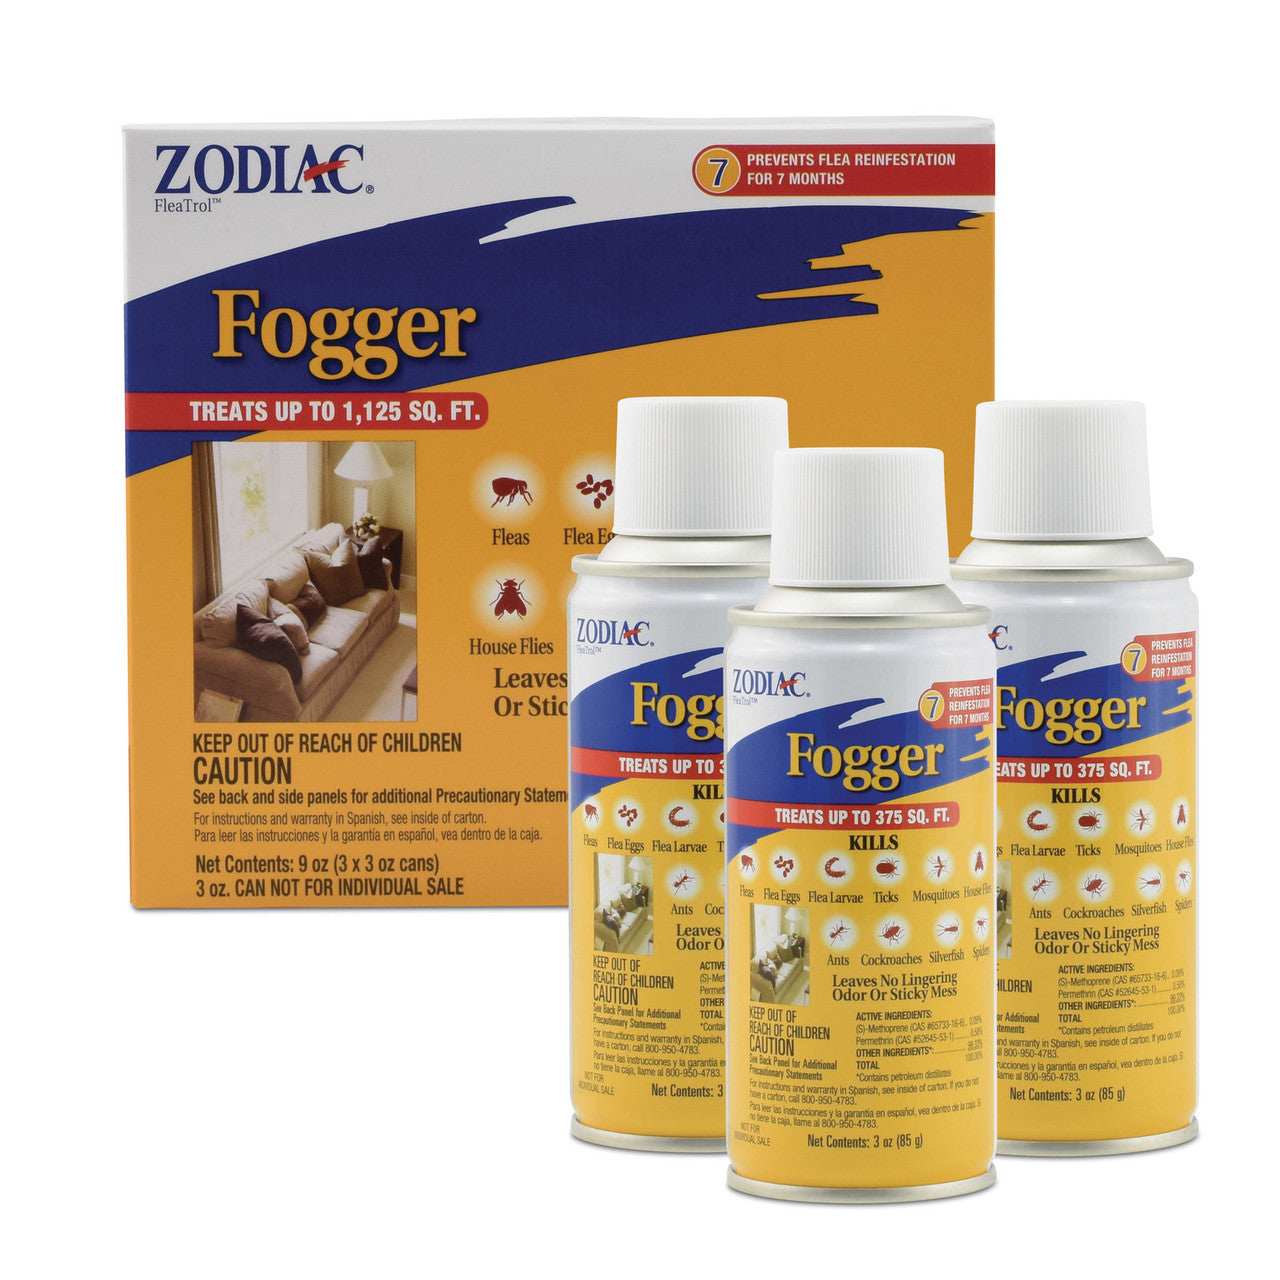 Zodiac Fogger 3 ounce cans, 3 Pack